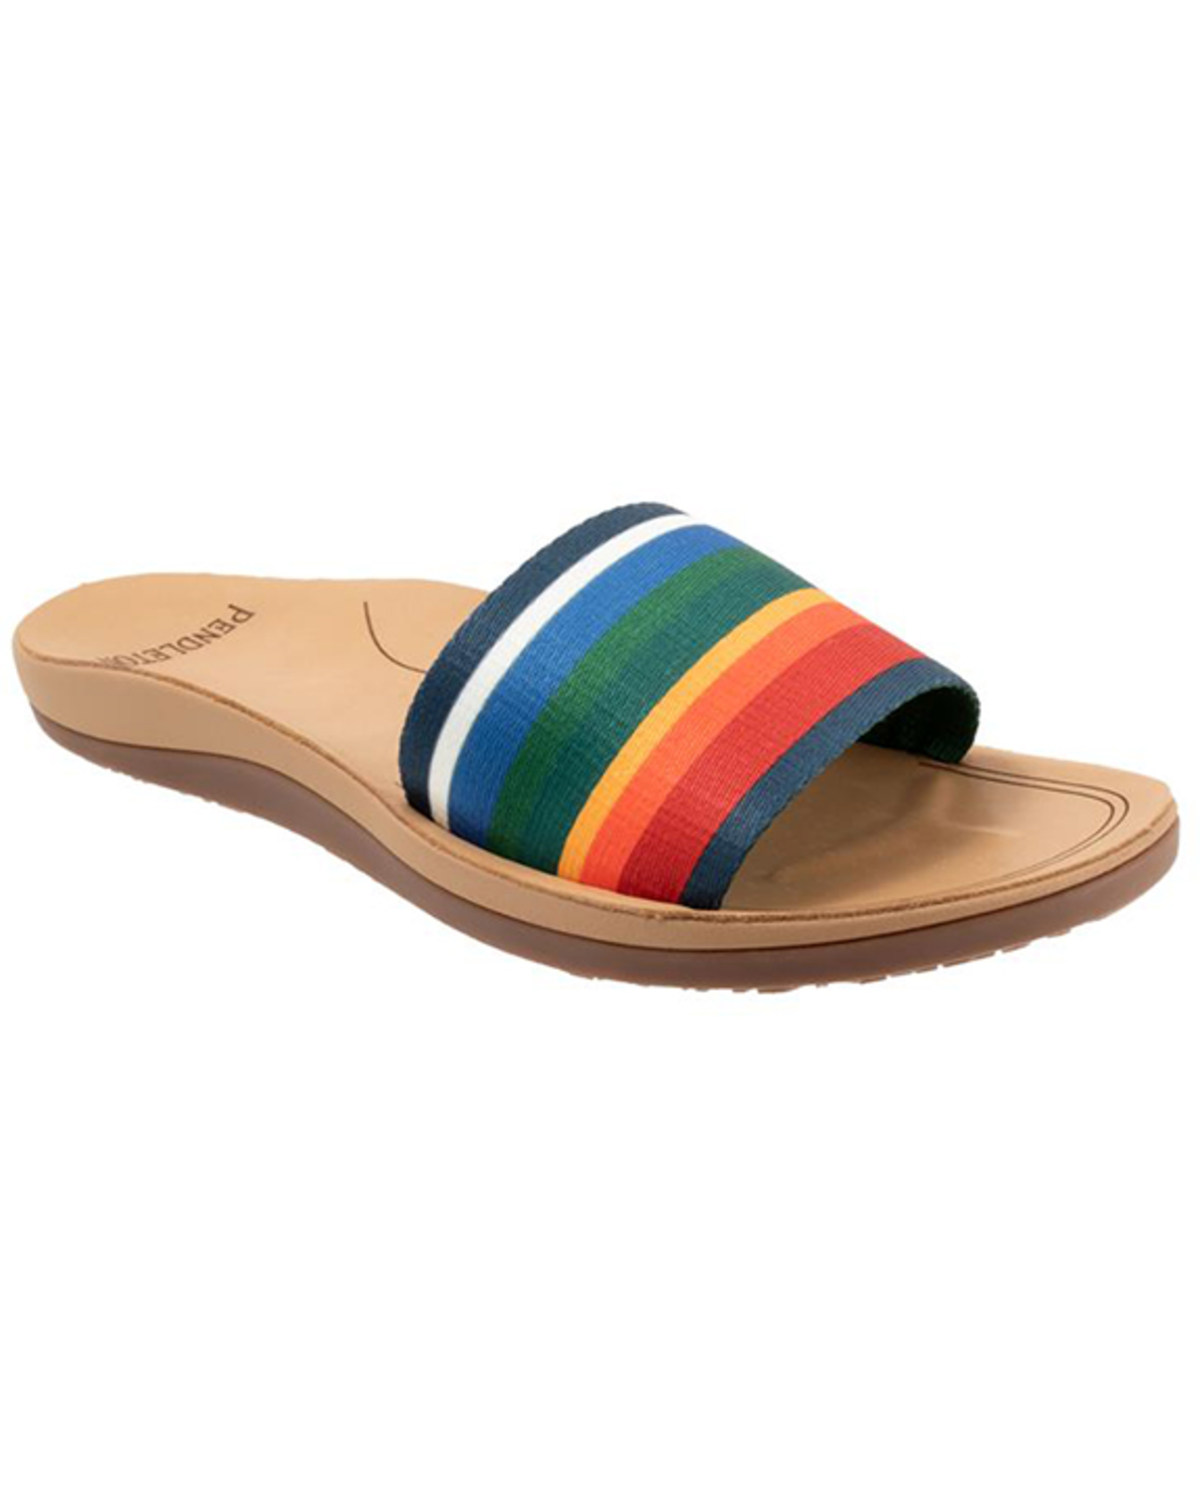 Pendleton Women's Crater Lake Slide Sandals